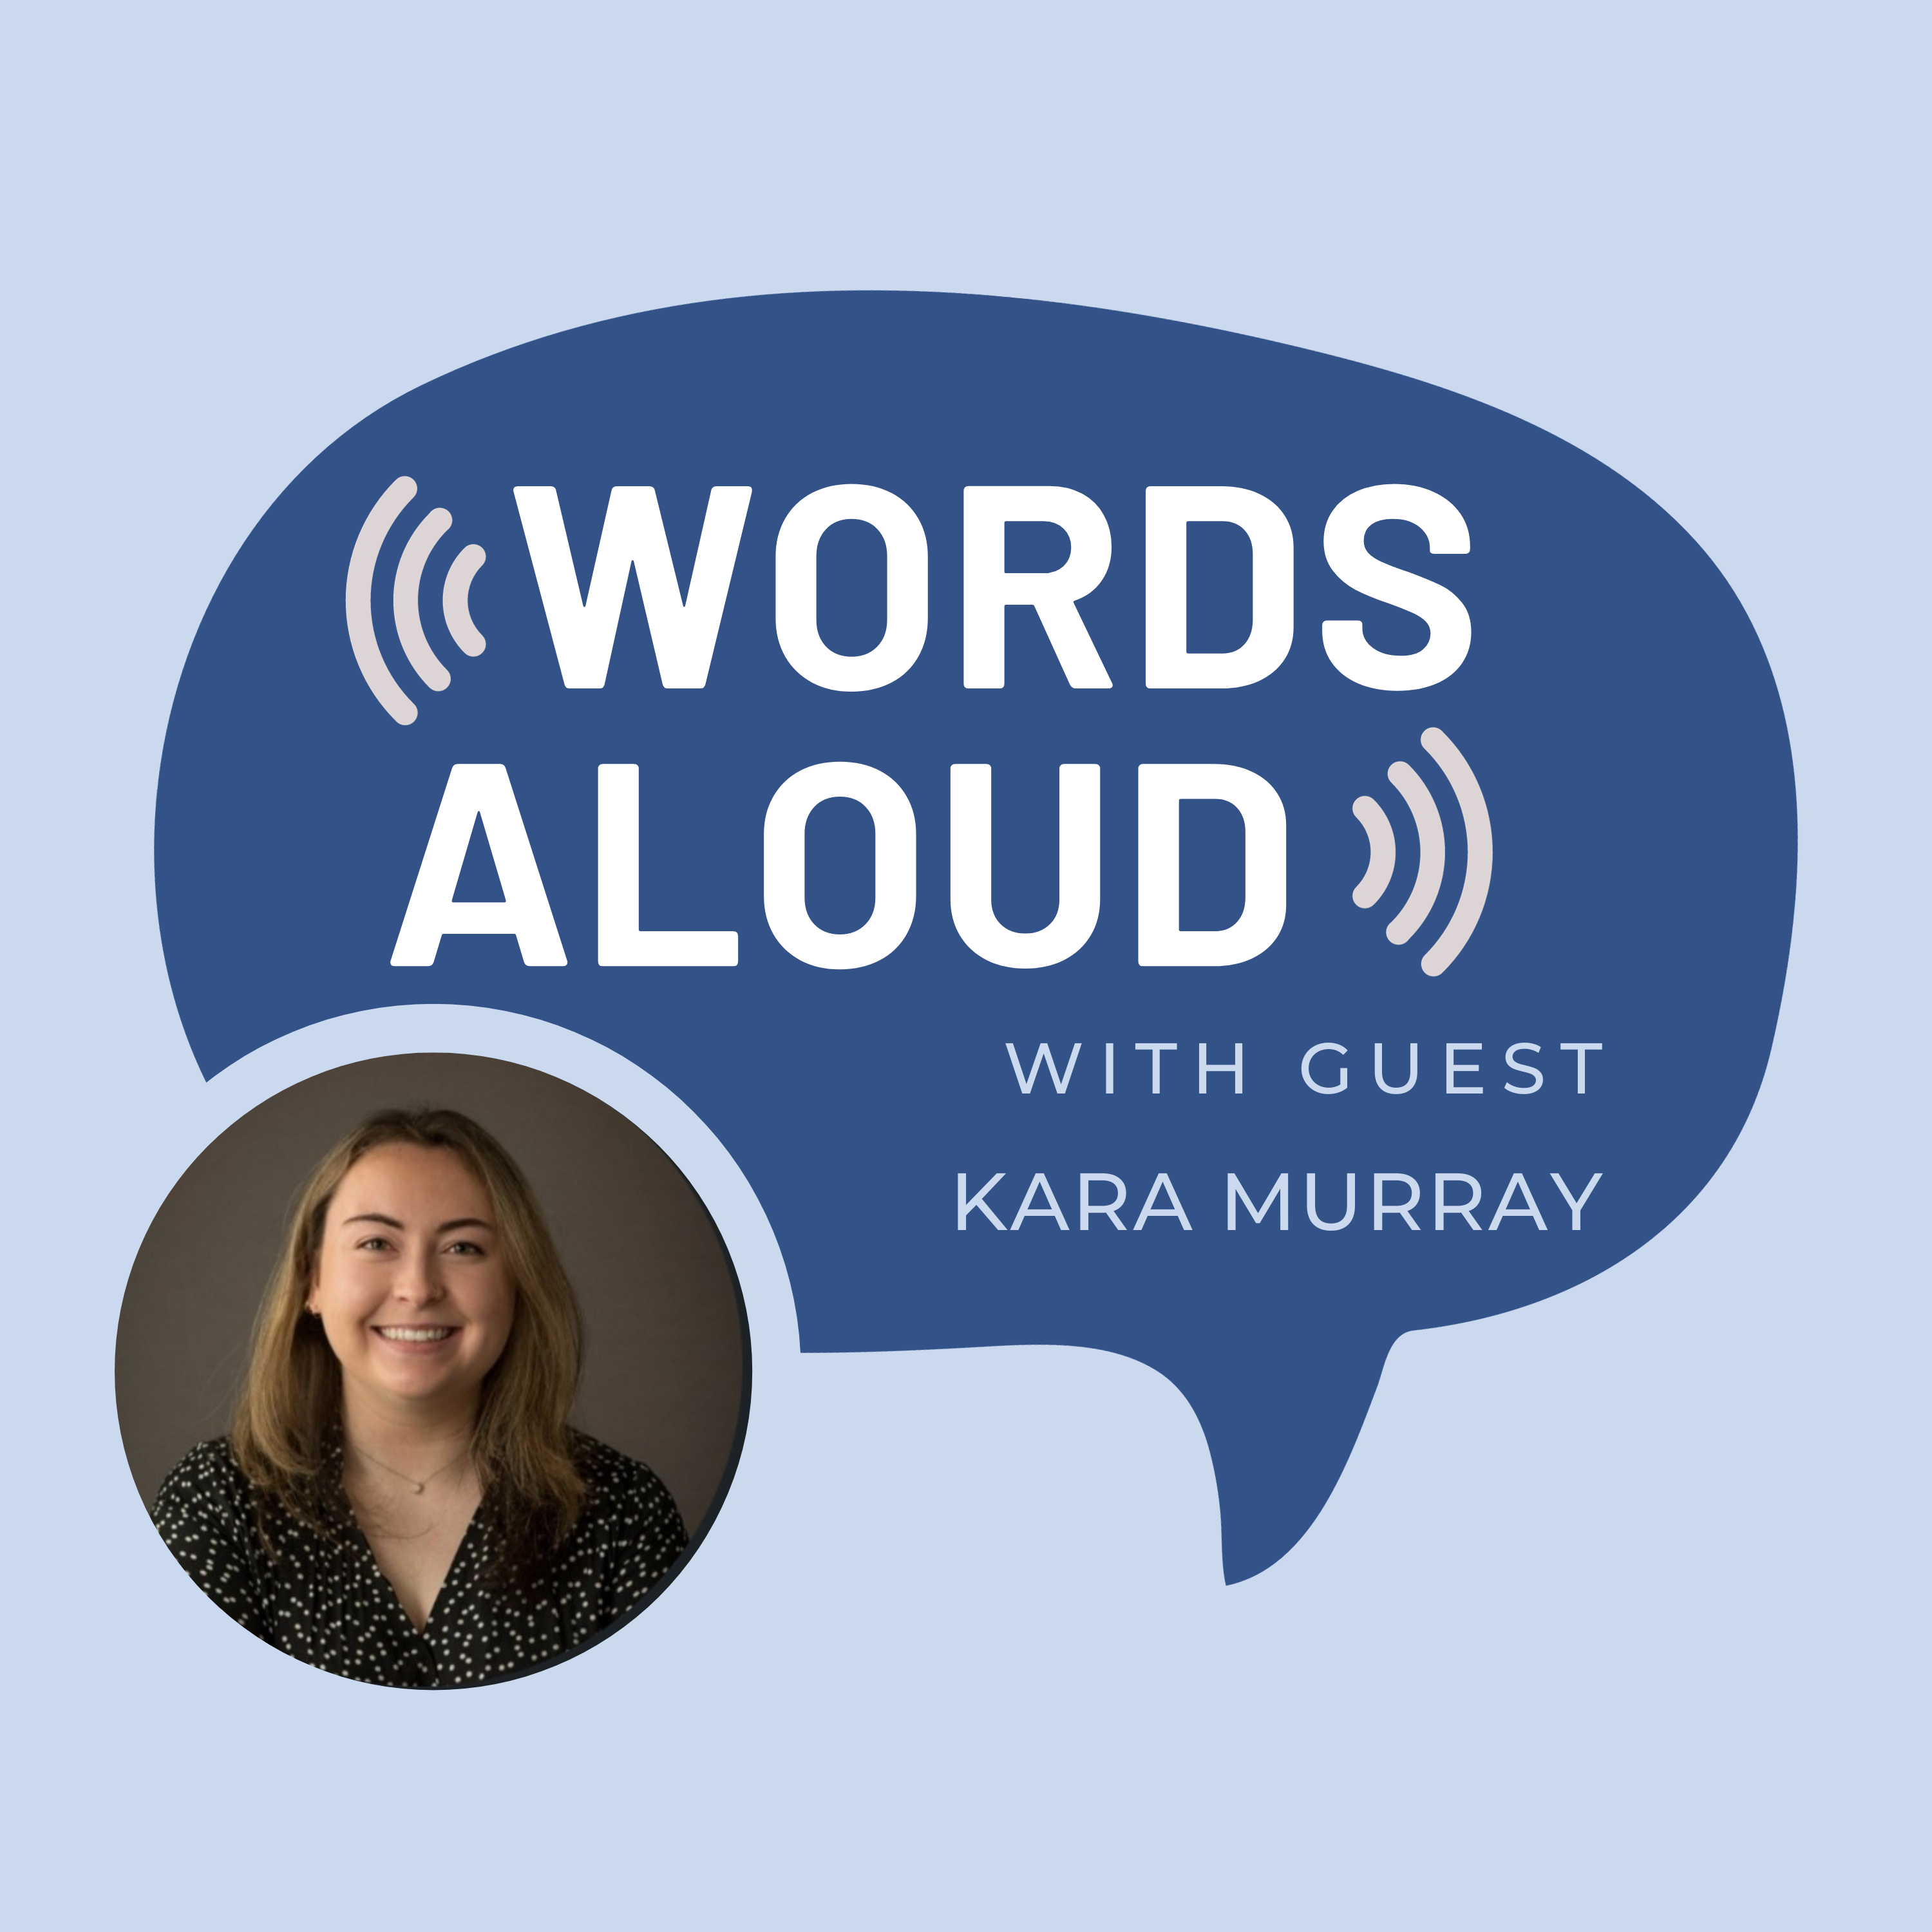 Words Aloud with guest Kara Murray